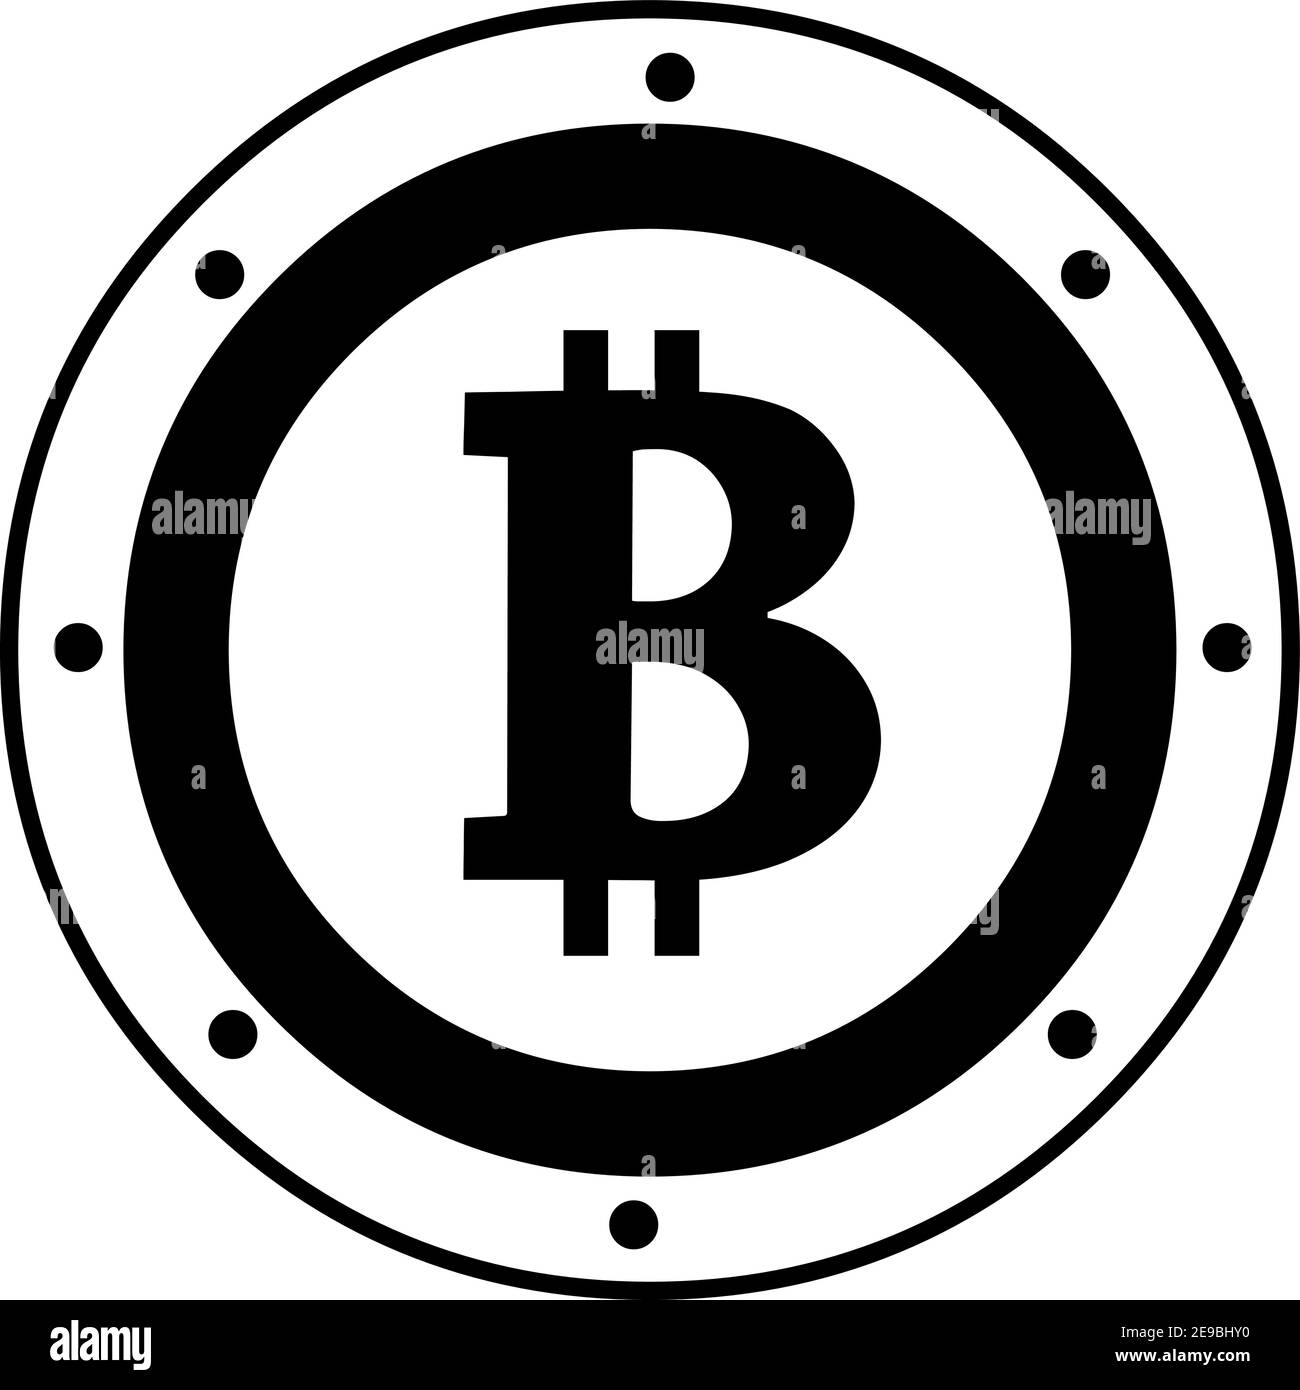 Vector illustration of a black and white bitcoin coin icon Stock Vector